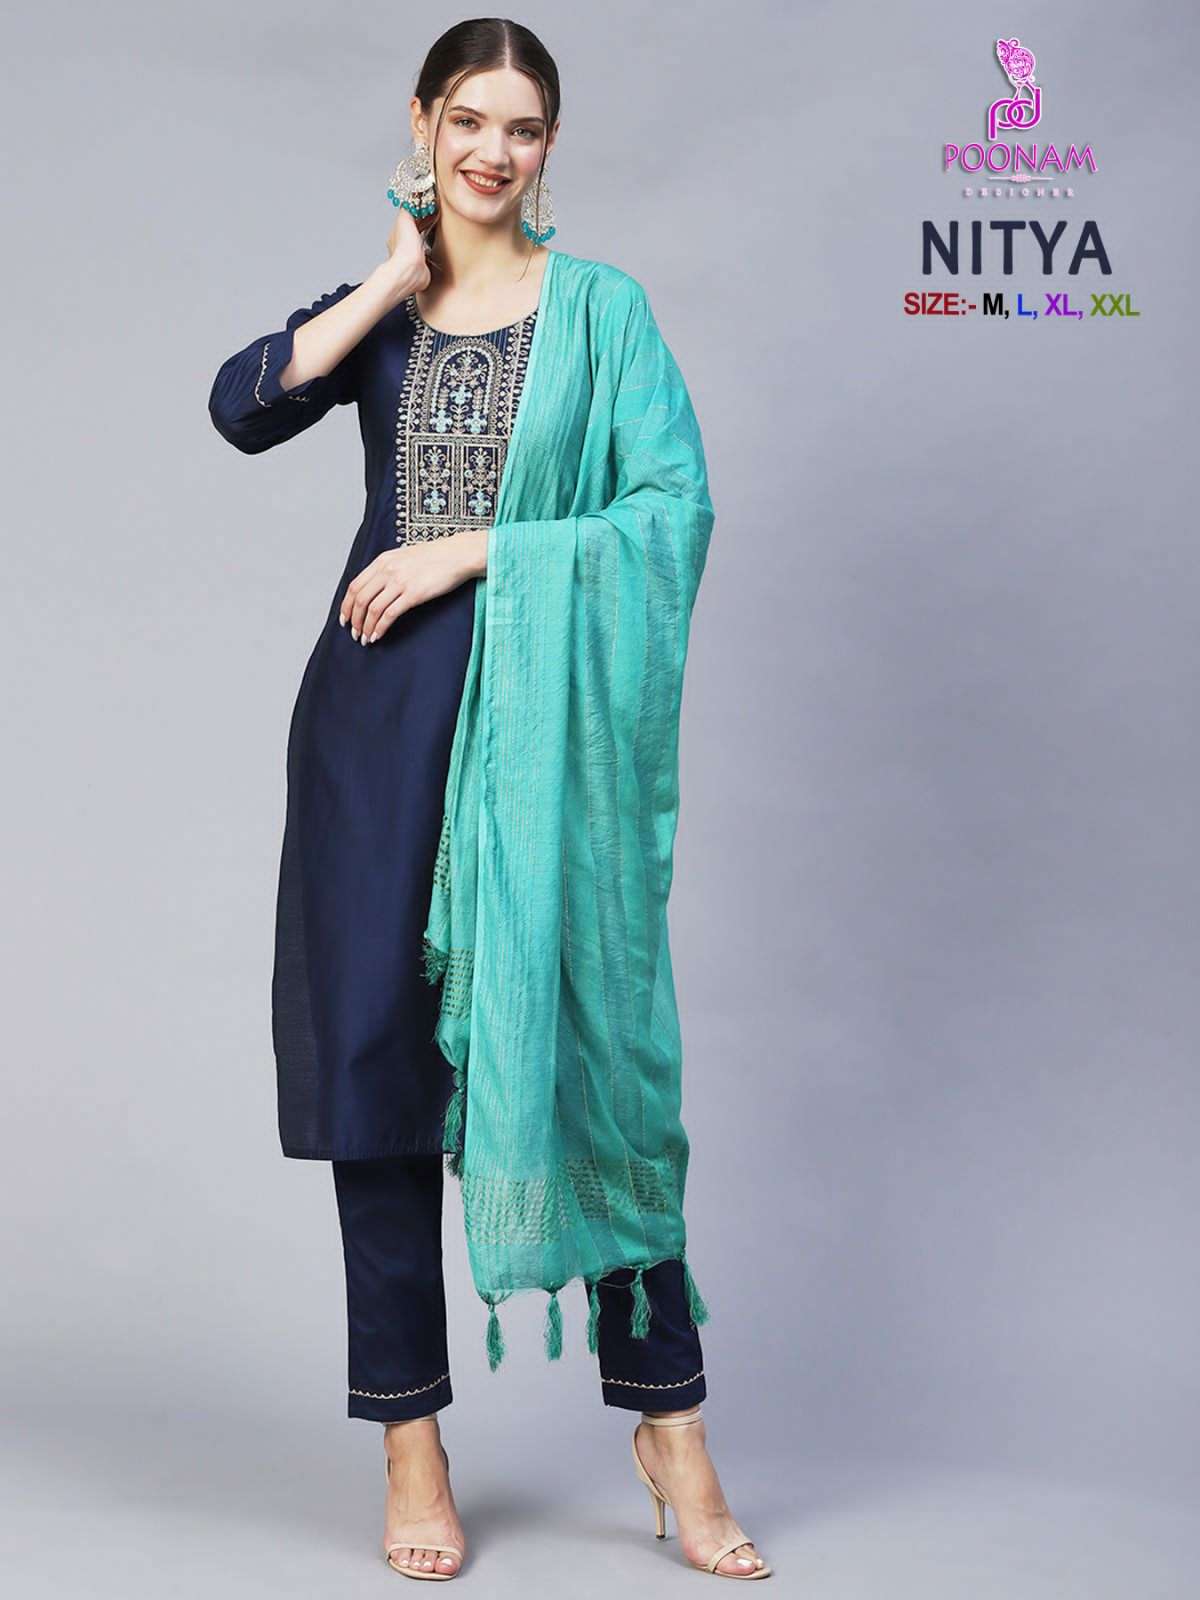 poonam designer present nitya amazing neck work kurti with pant and dupatta online supplier